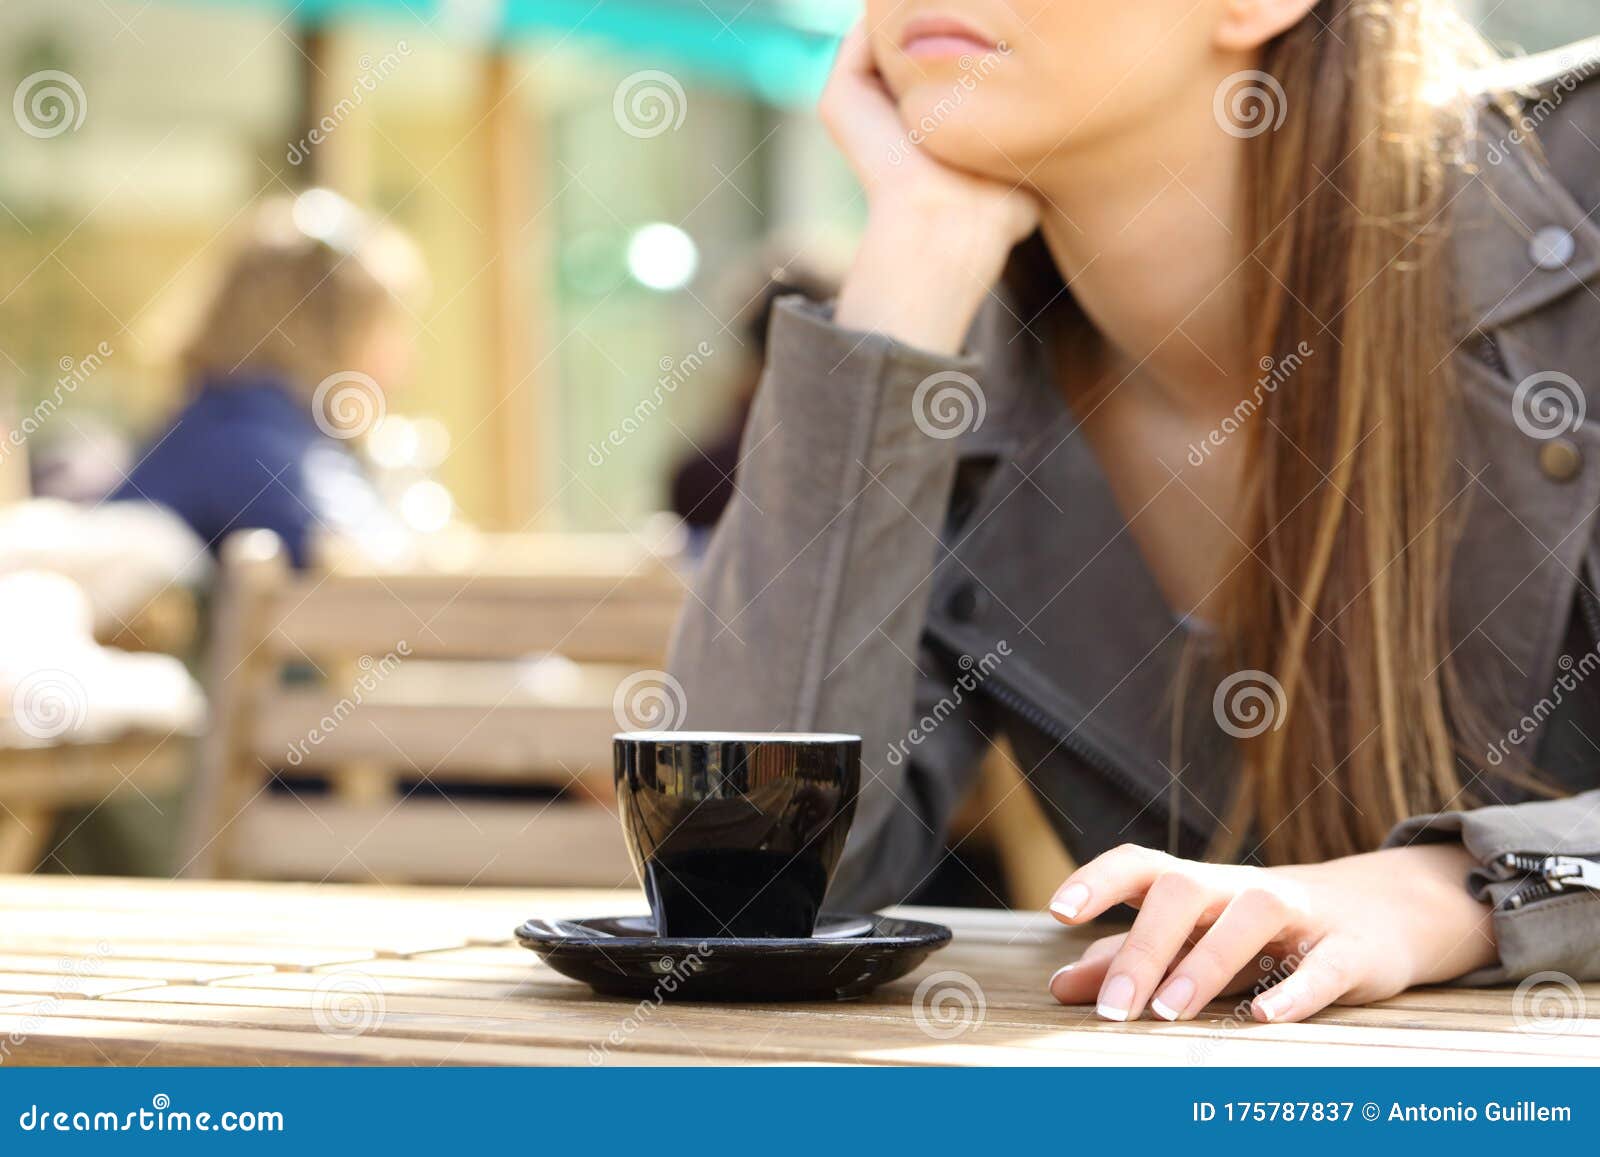 impatient woman waiting on a cafe terrace